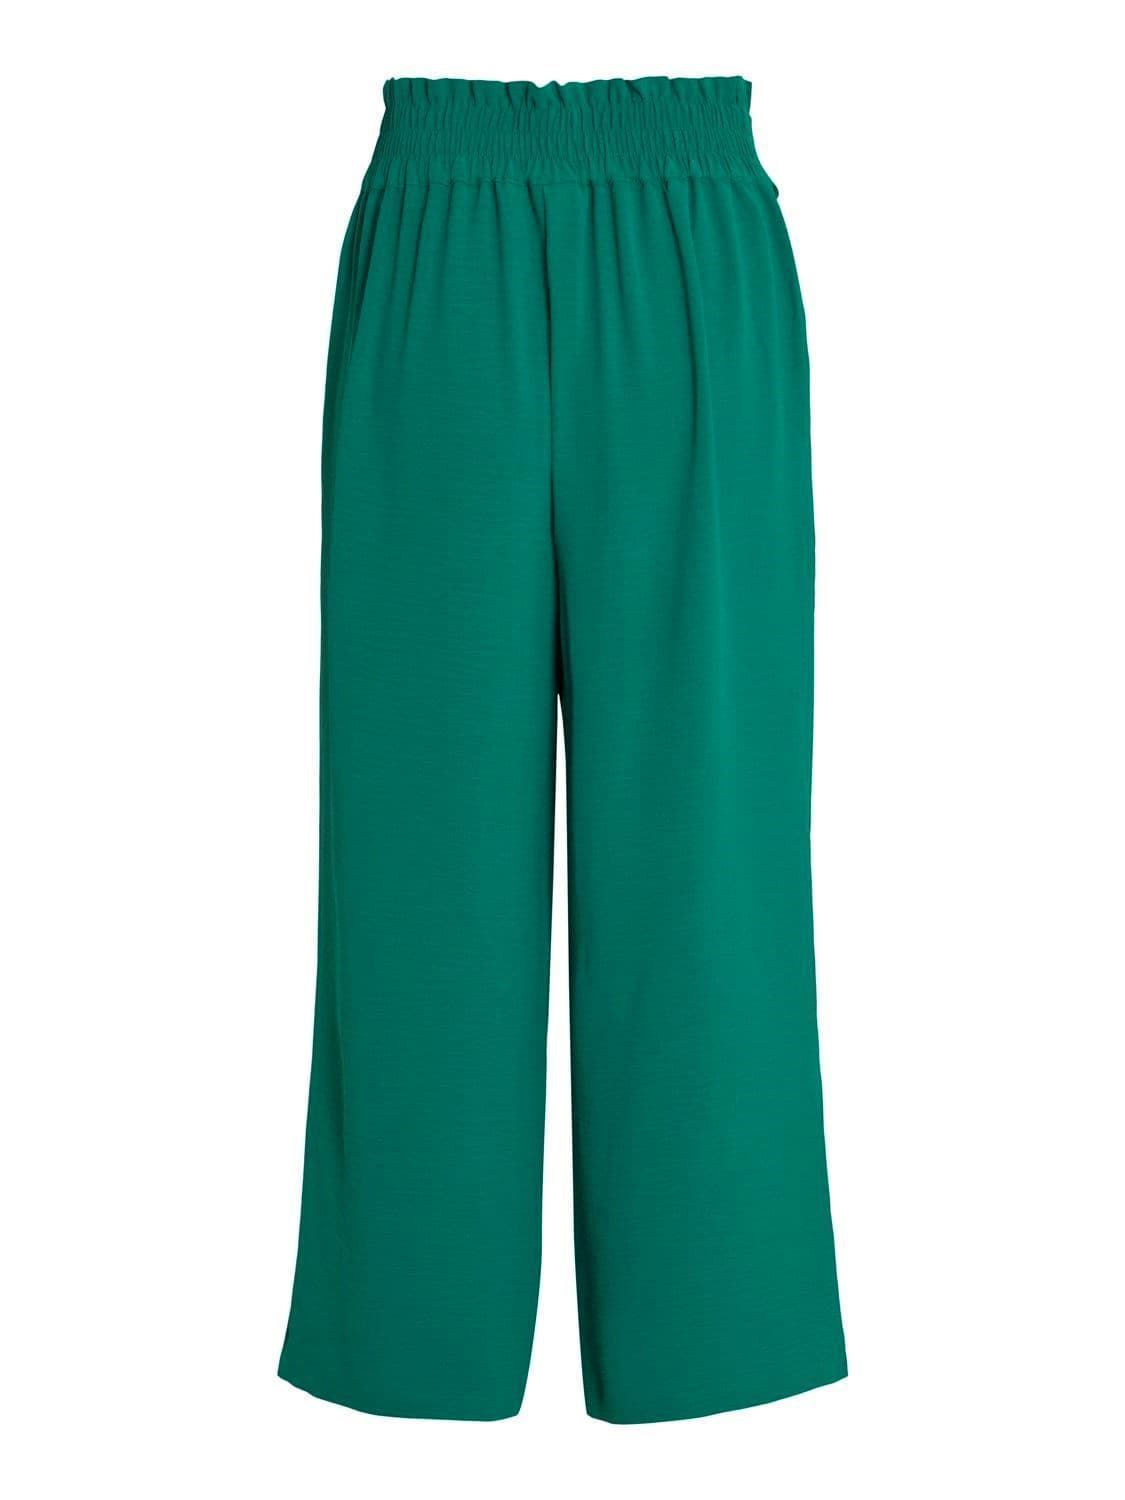 Pantalón verde viwinnie - Imagen 6